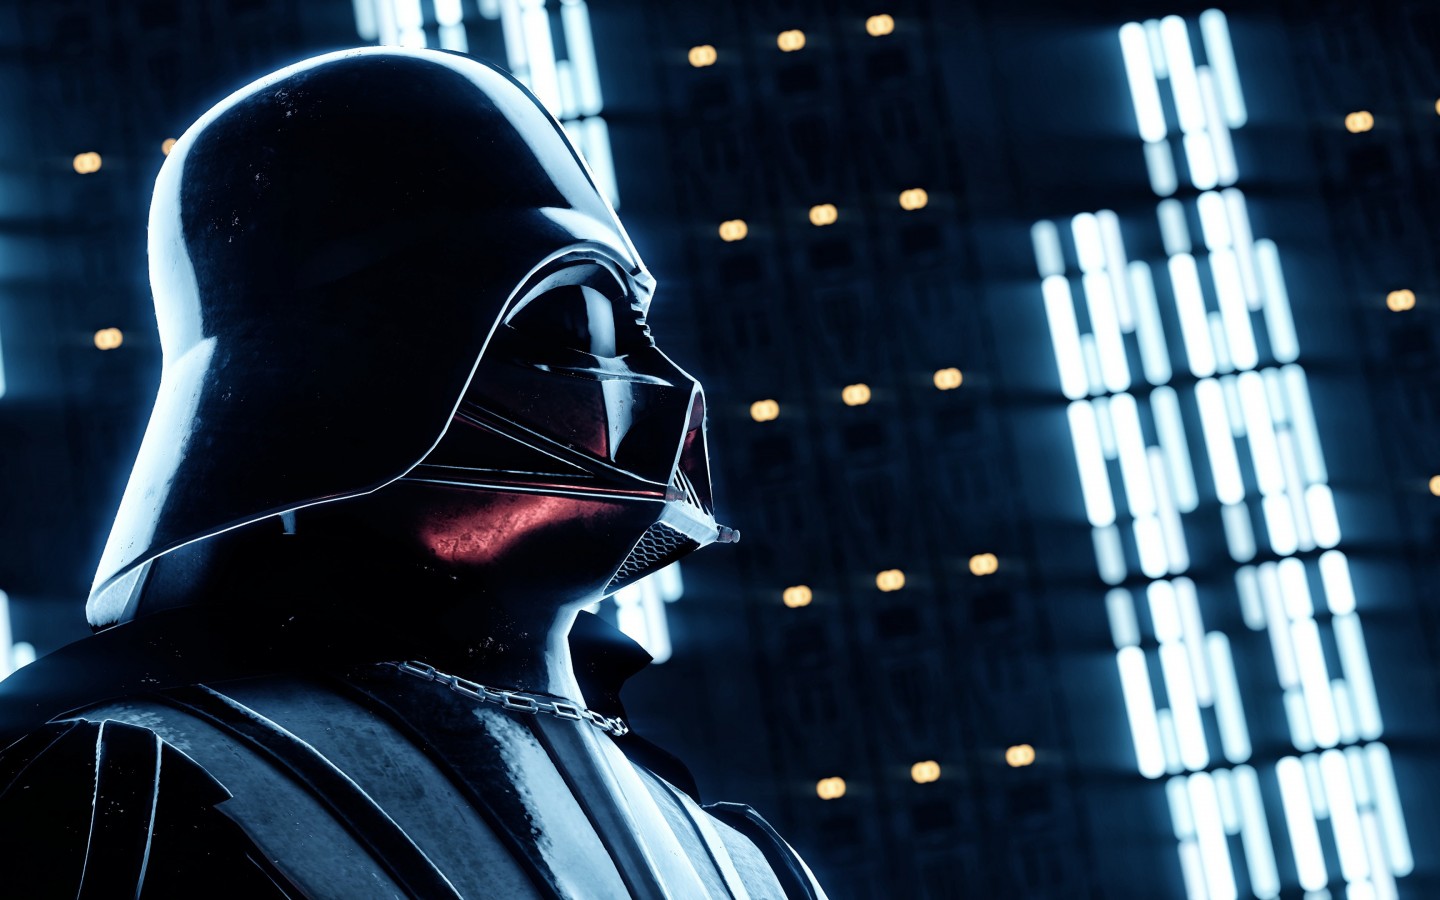 Darth Vader - Profile